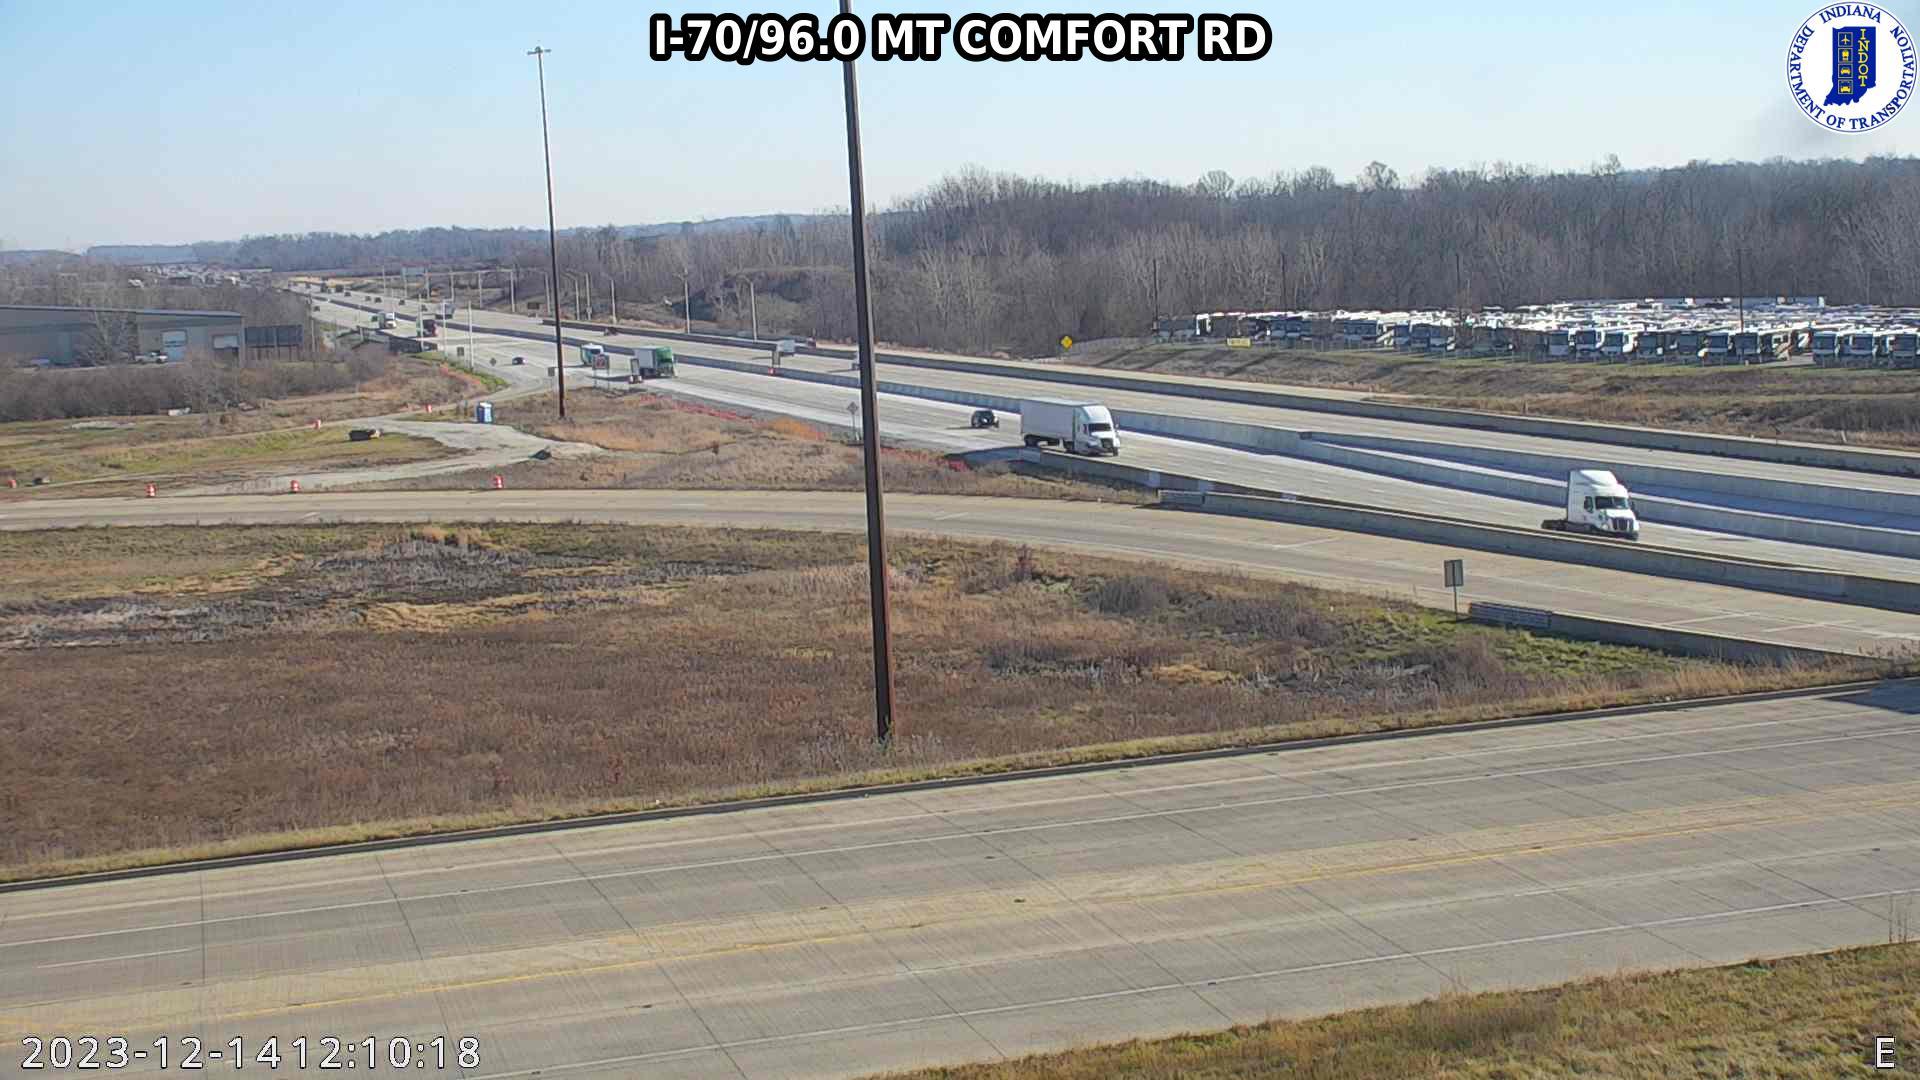 Mount Comfort: I-70: I-70/96.0 MT COMFORT RD Traffic Camera